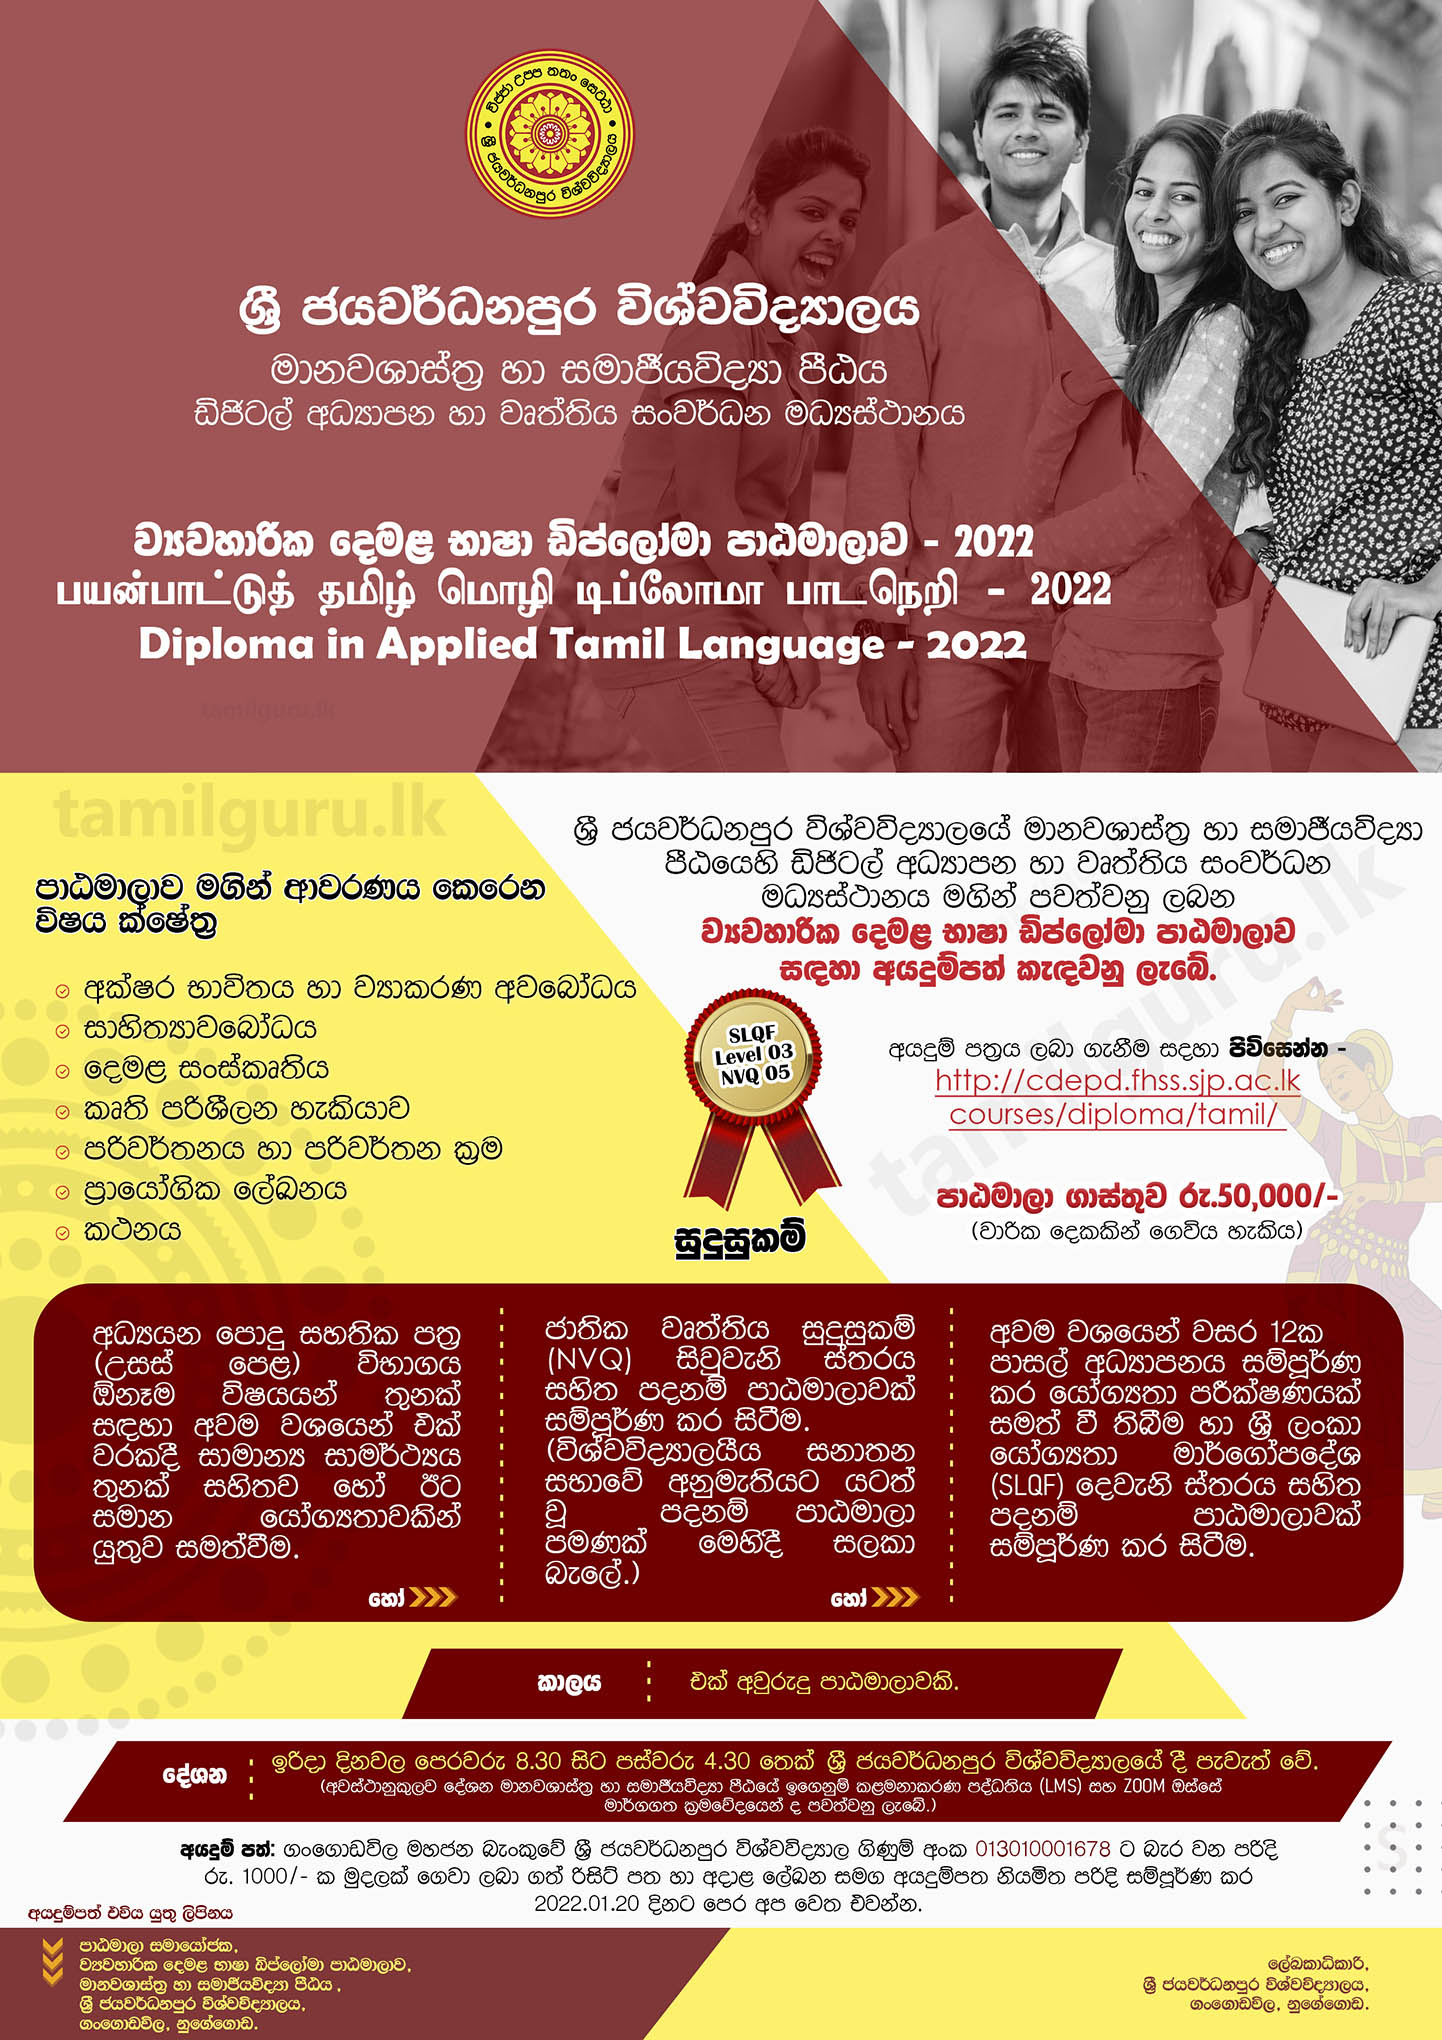 Diploma in Applied Tamil Language 2022 - University of Sri Jayewardenepura / ව්‍යවහාරික දෙමළ භාෂා ඩිප්ලෝමා පාඨමාලාව - ශ්‍රී ජයවර්ධනපුර විශ්වවිද්‍යාලය